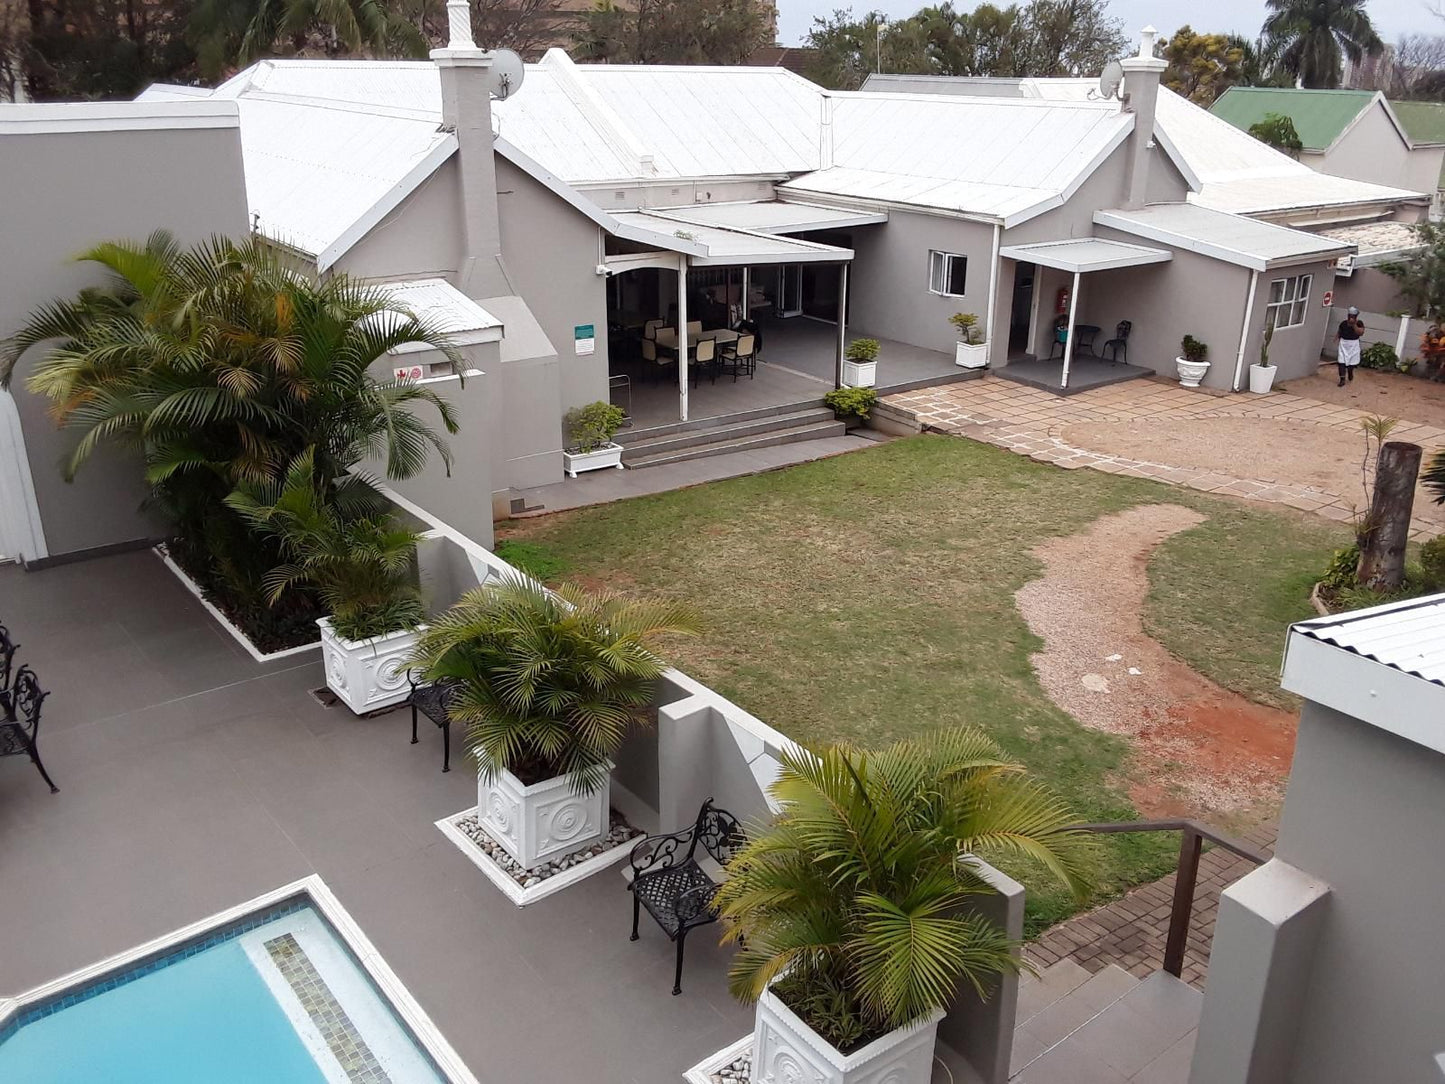 Bon Ami Morningside Durban Kwazulu Natal South Africa House, Building, Architecture, Palm Tree, Plant, Nature, Wood, Swimming Pool